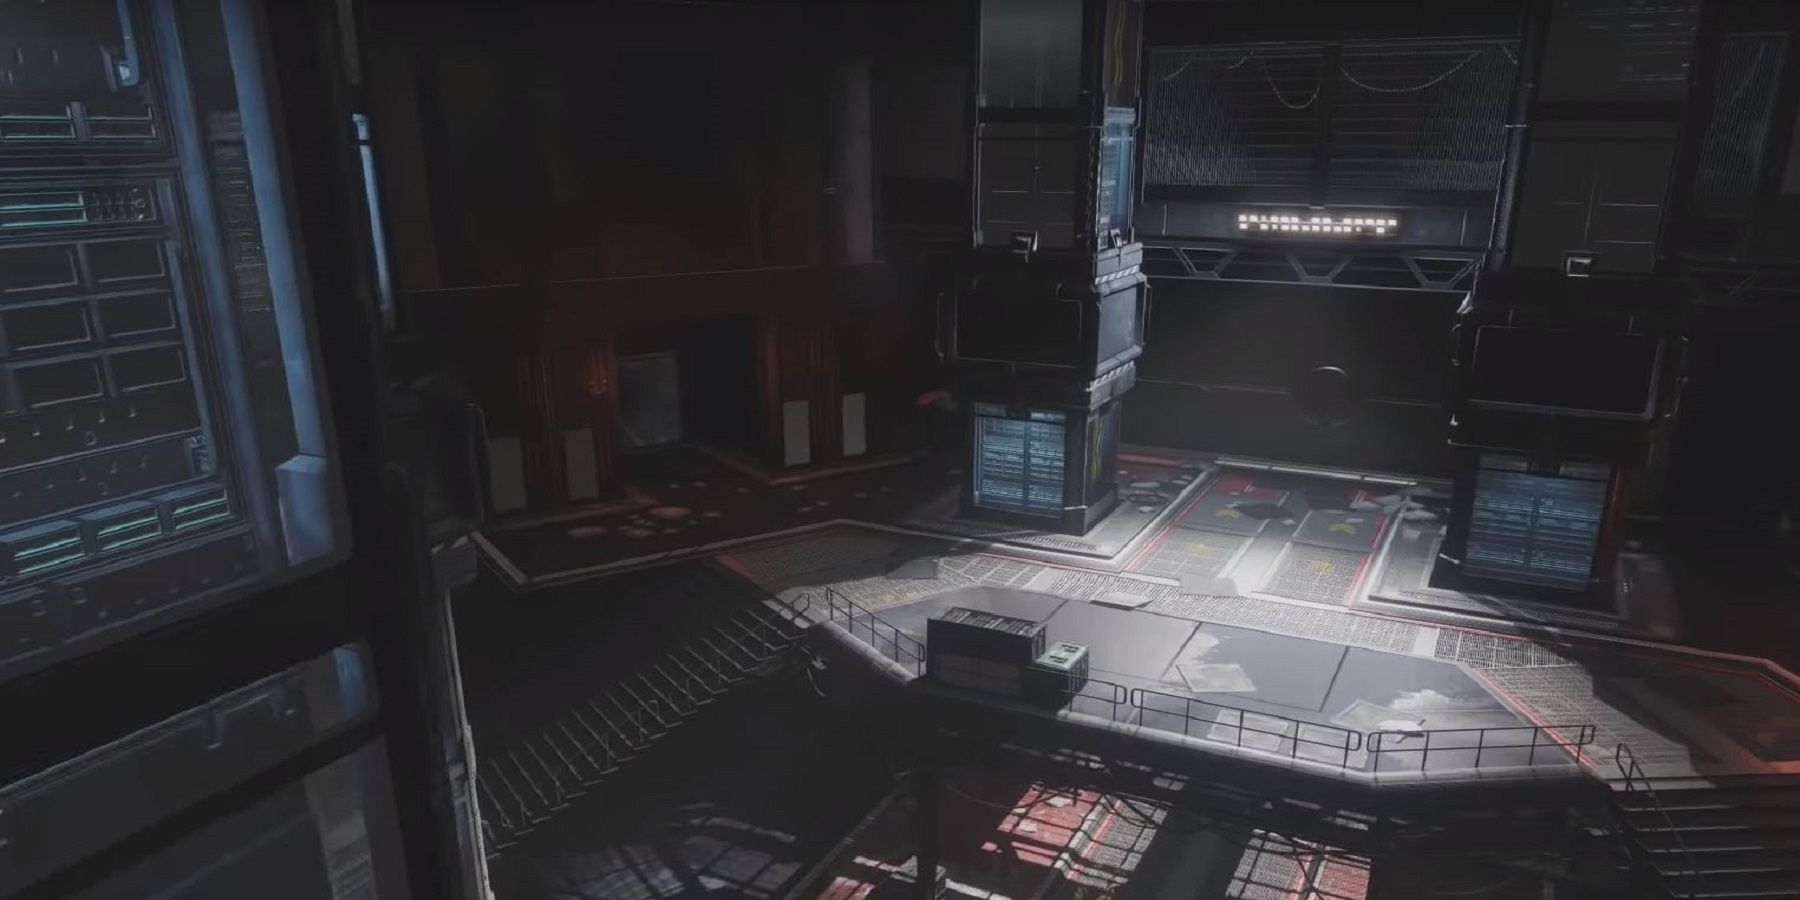 A newer Destiny 2 player shares their experience inside EDZ's Niobe Labs.